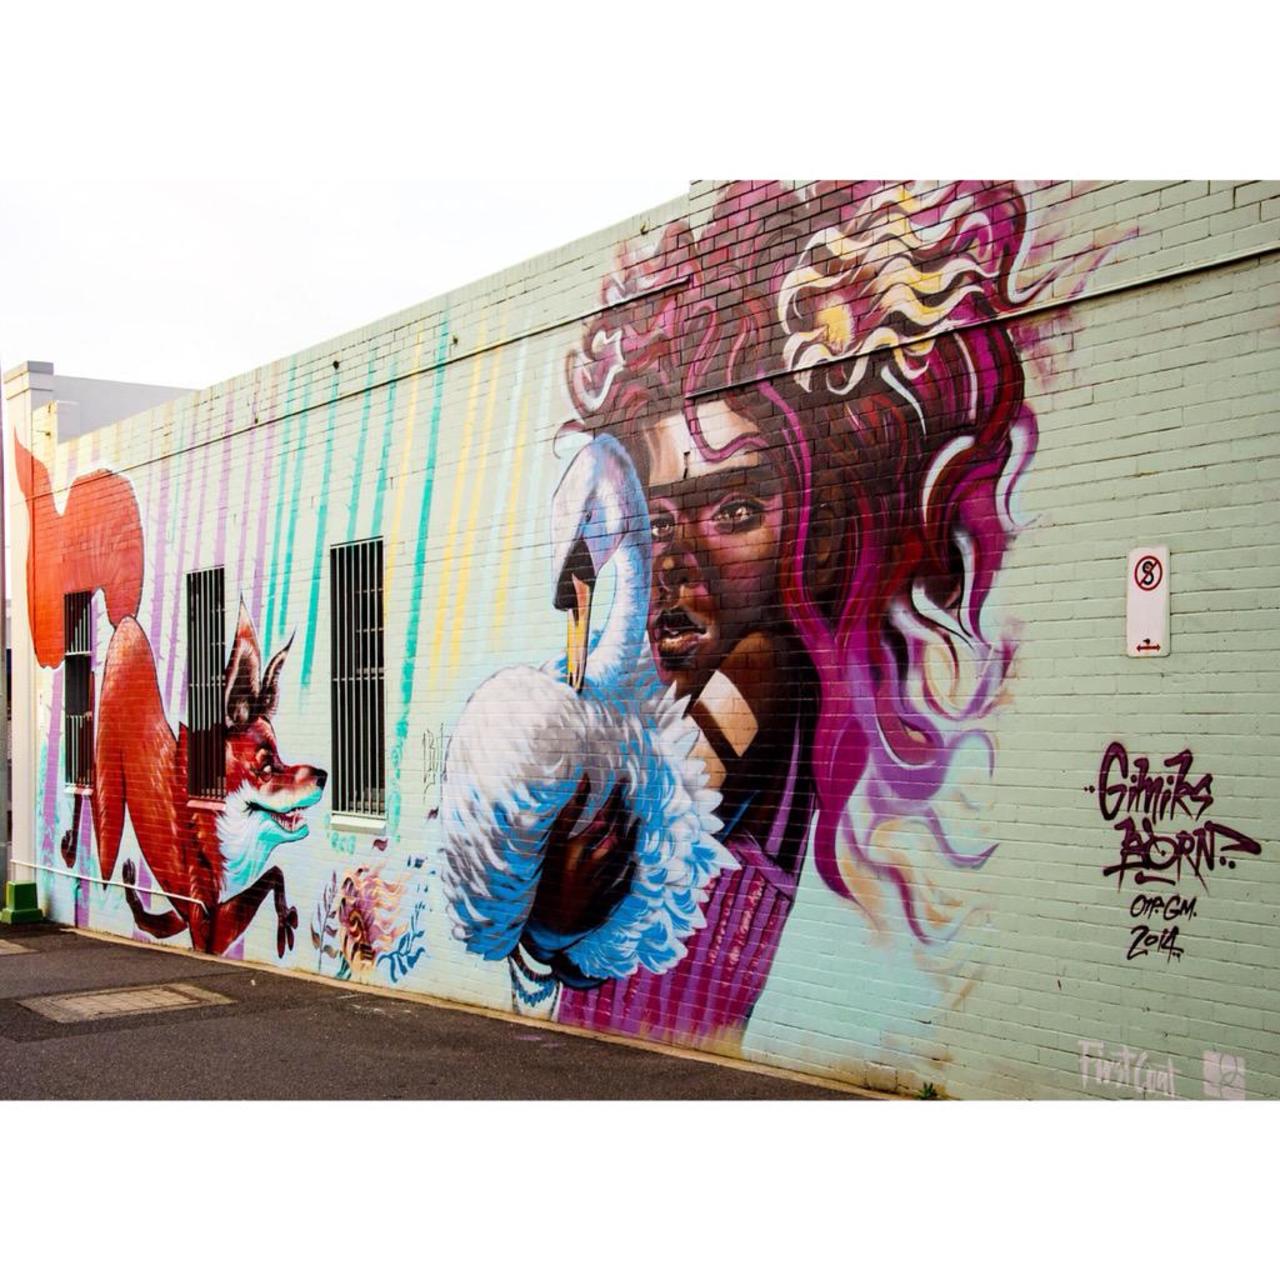 RT @rowen_nick: #streetart #urbanart #graffiti #art #urban #streetphotography #mural #wallporn #urbanwalls #graffitiporn #picoftheday http://t.co/13A3KPAqlq